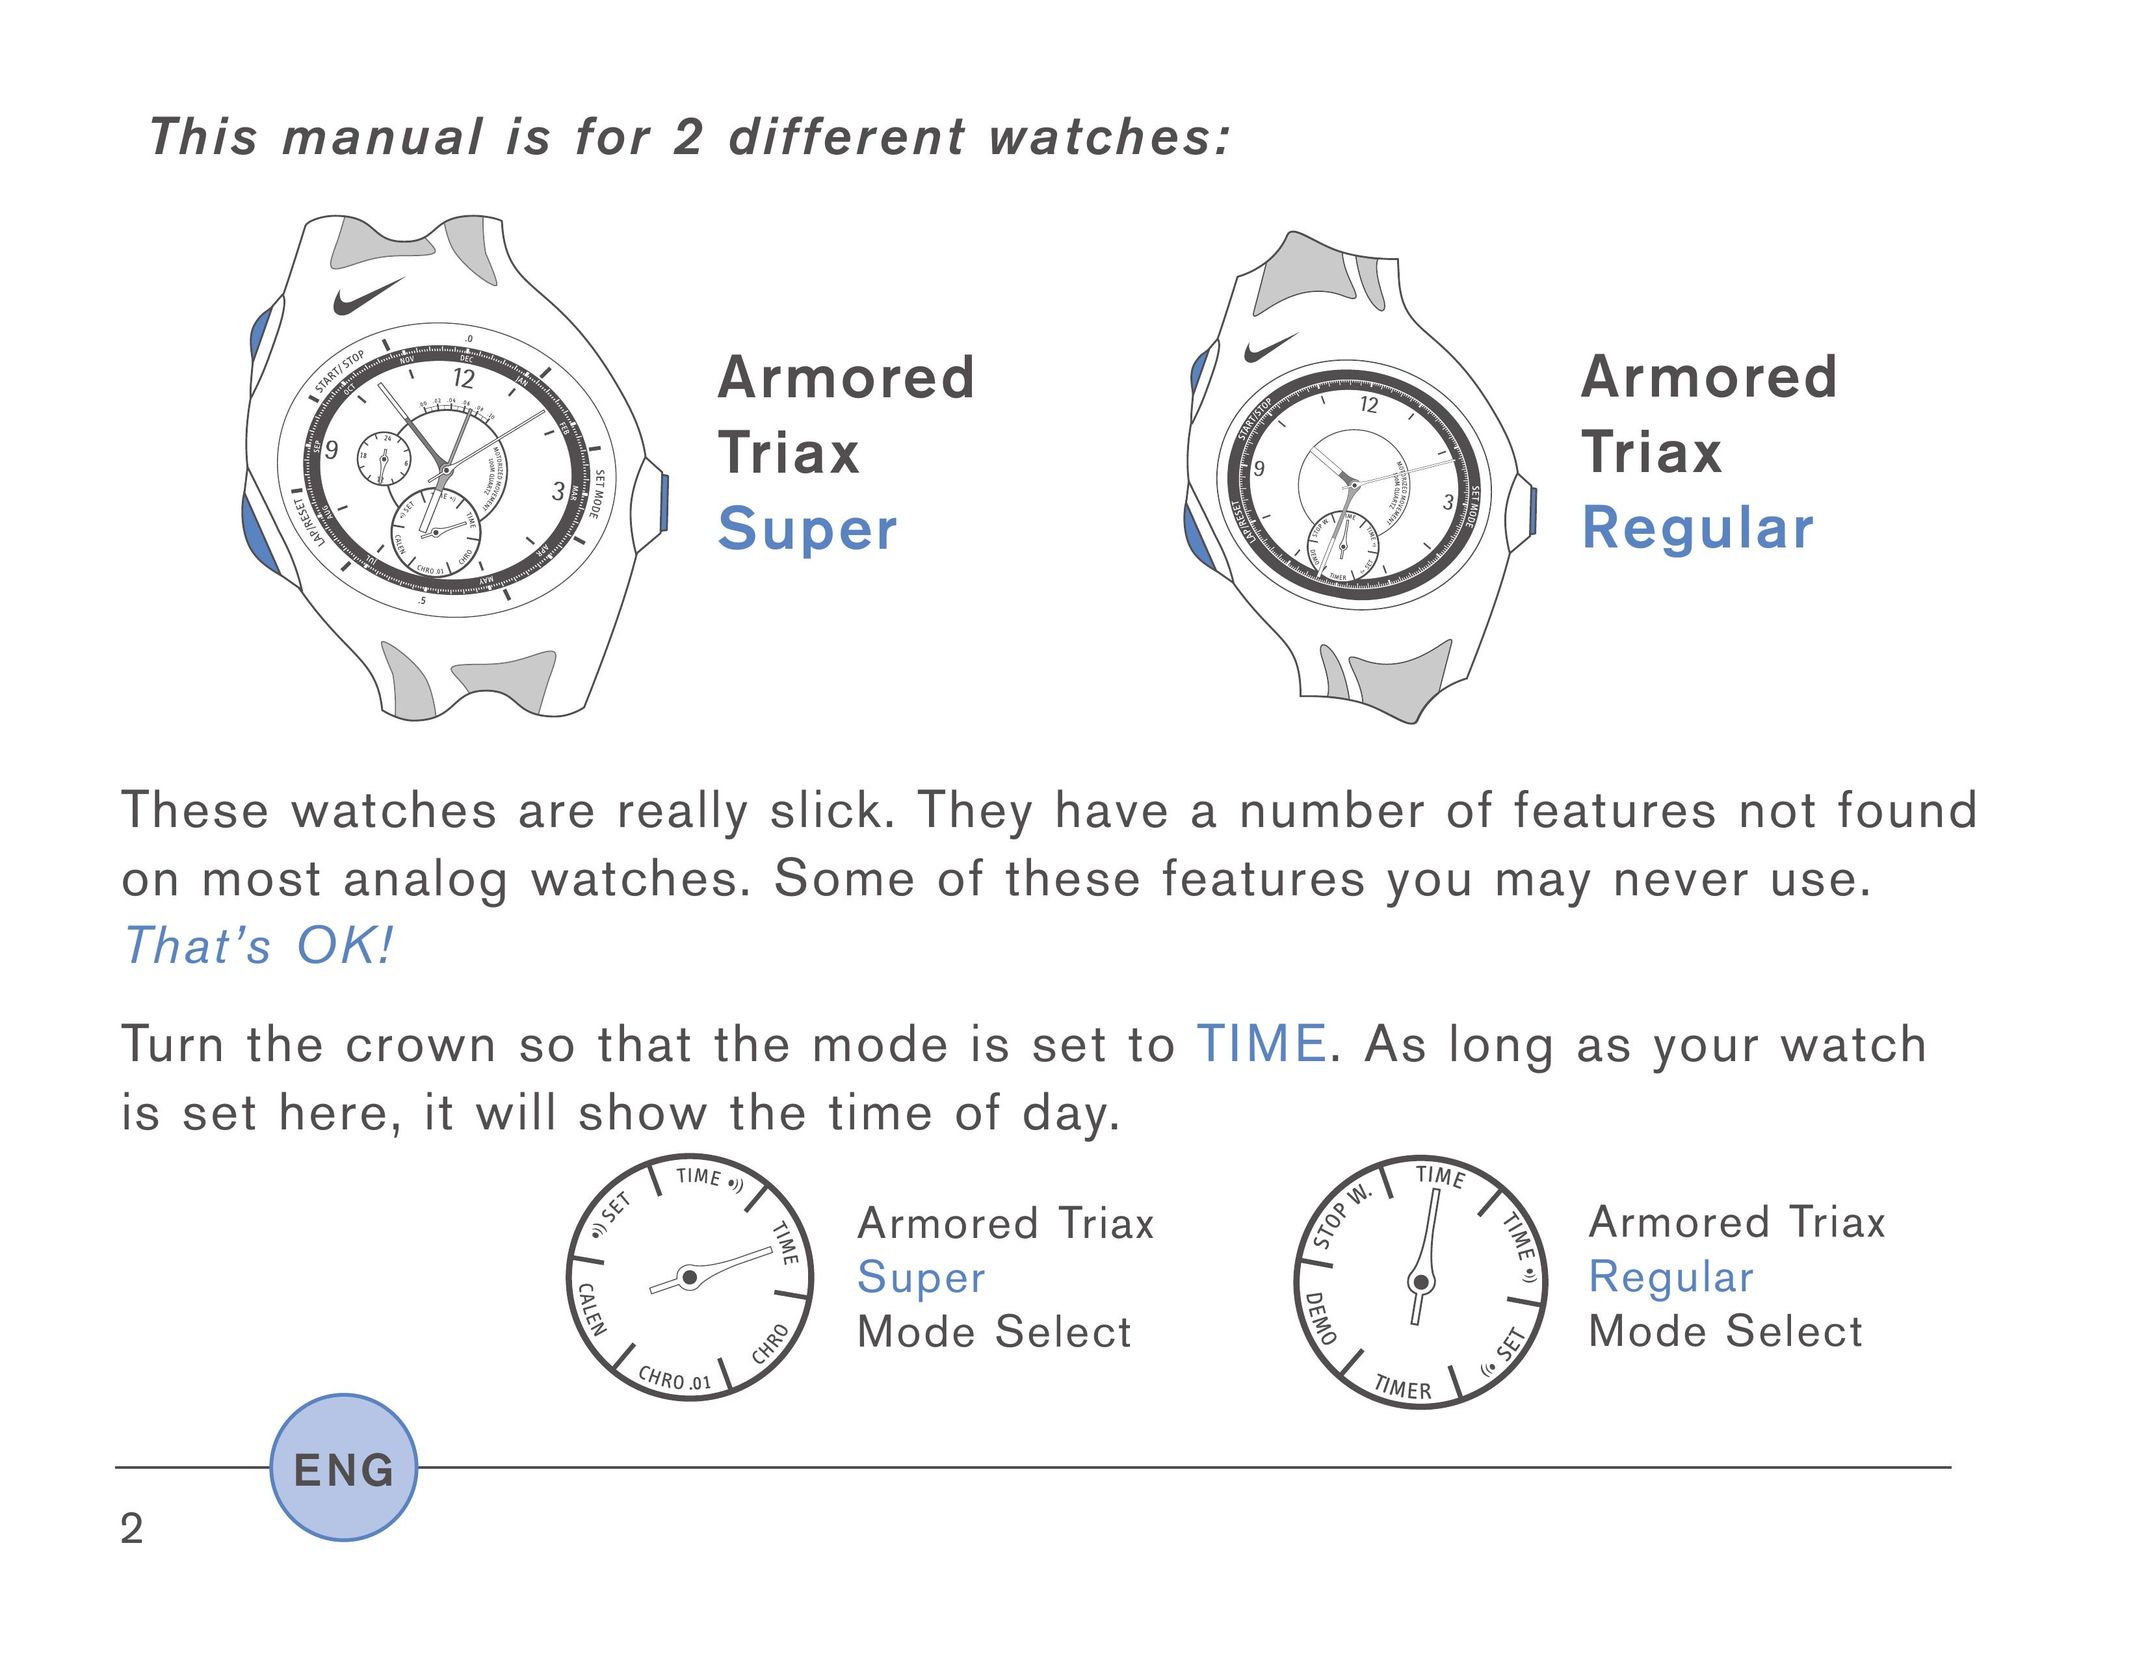 Triax SR920W Watch User Manual